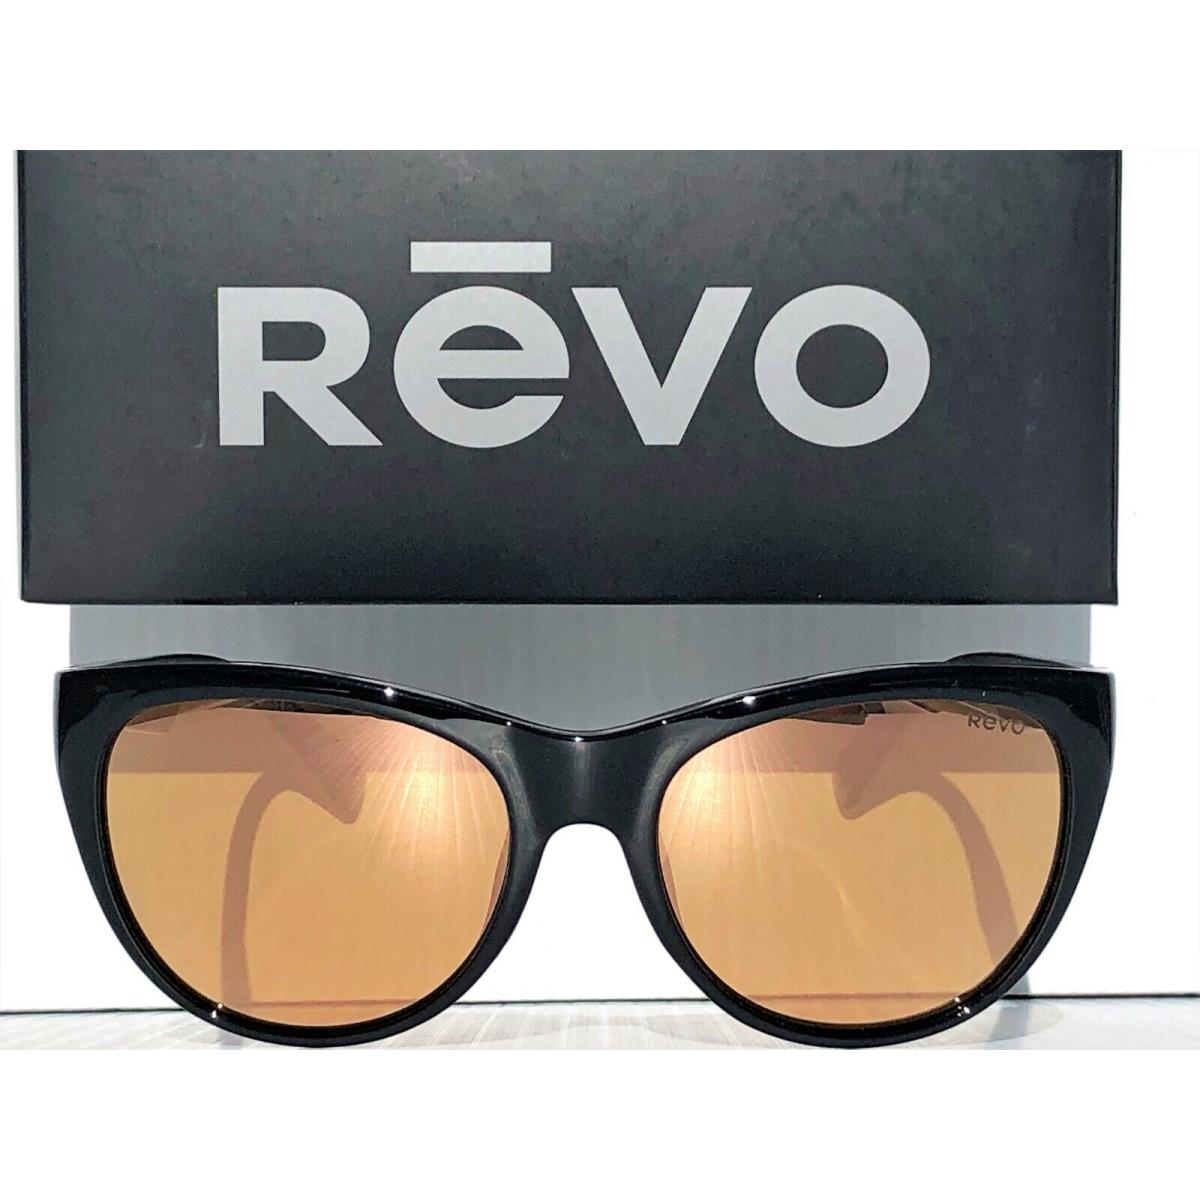 Revo sunglasses BARCLAY - Black Frame, Champaign Lens